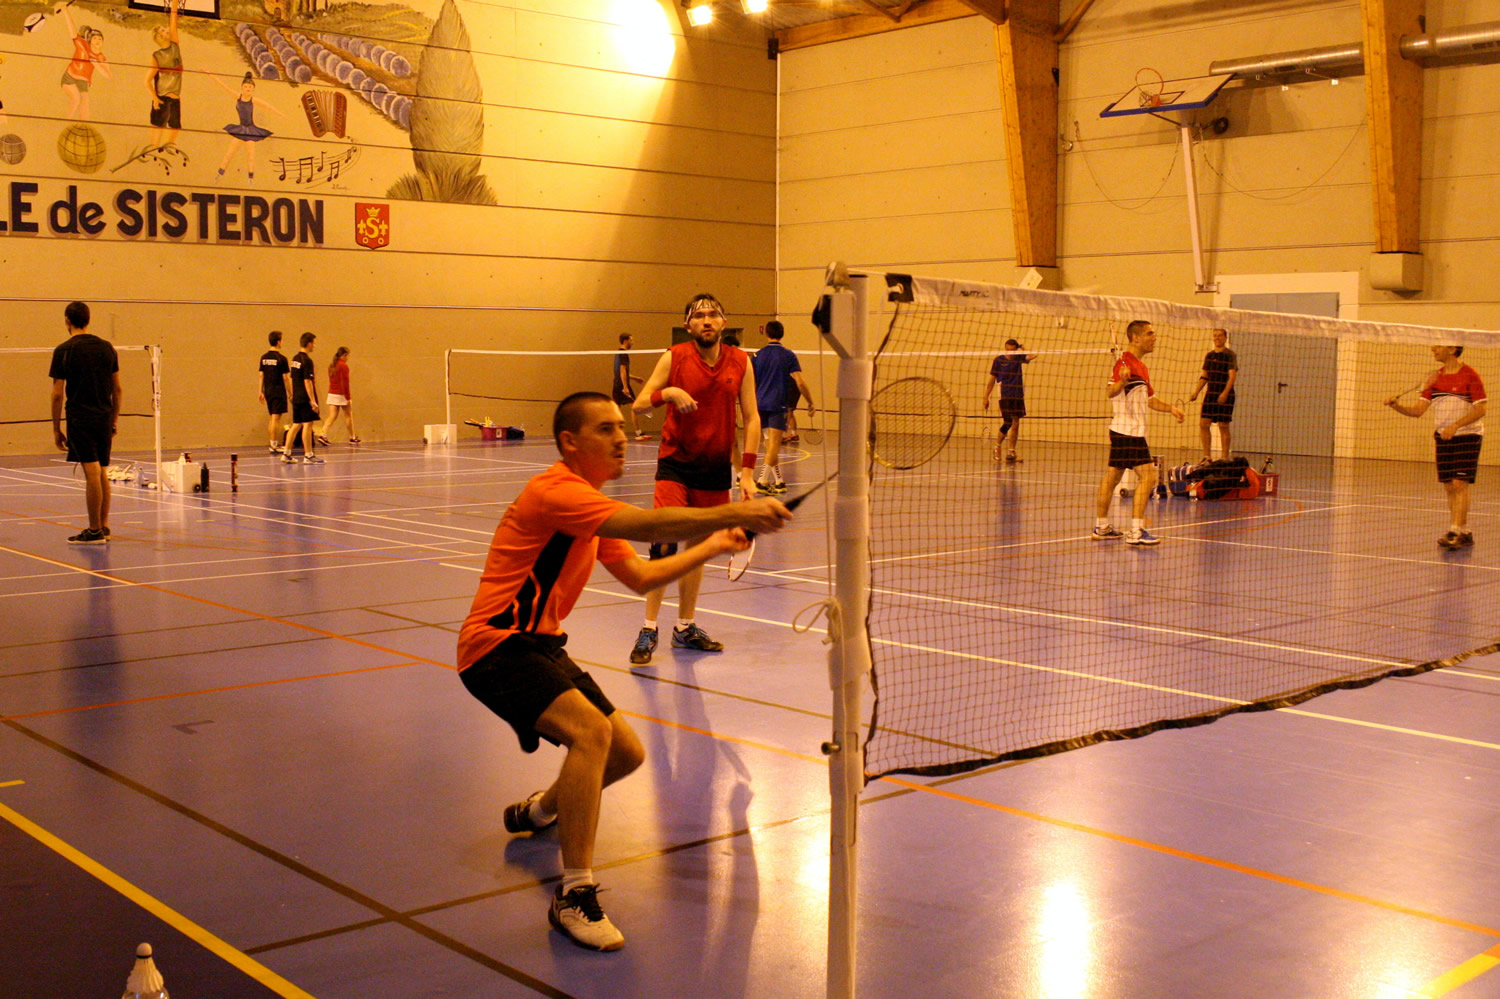 Sisteron capitale du badminton ce week-end !